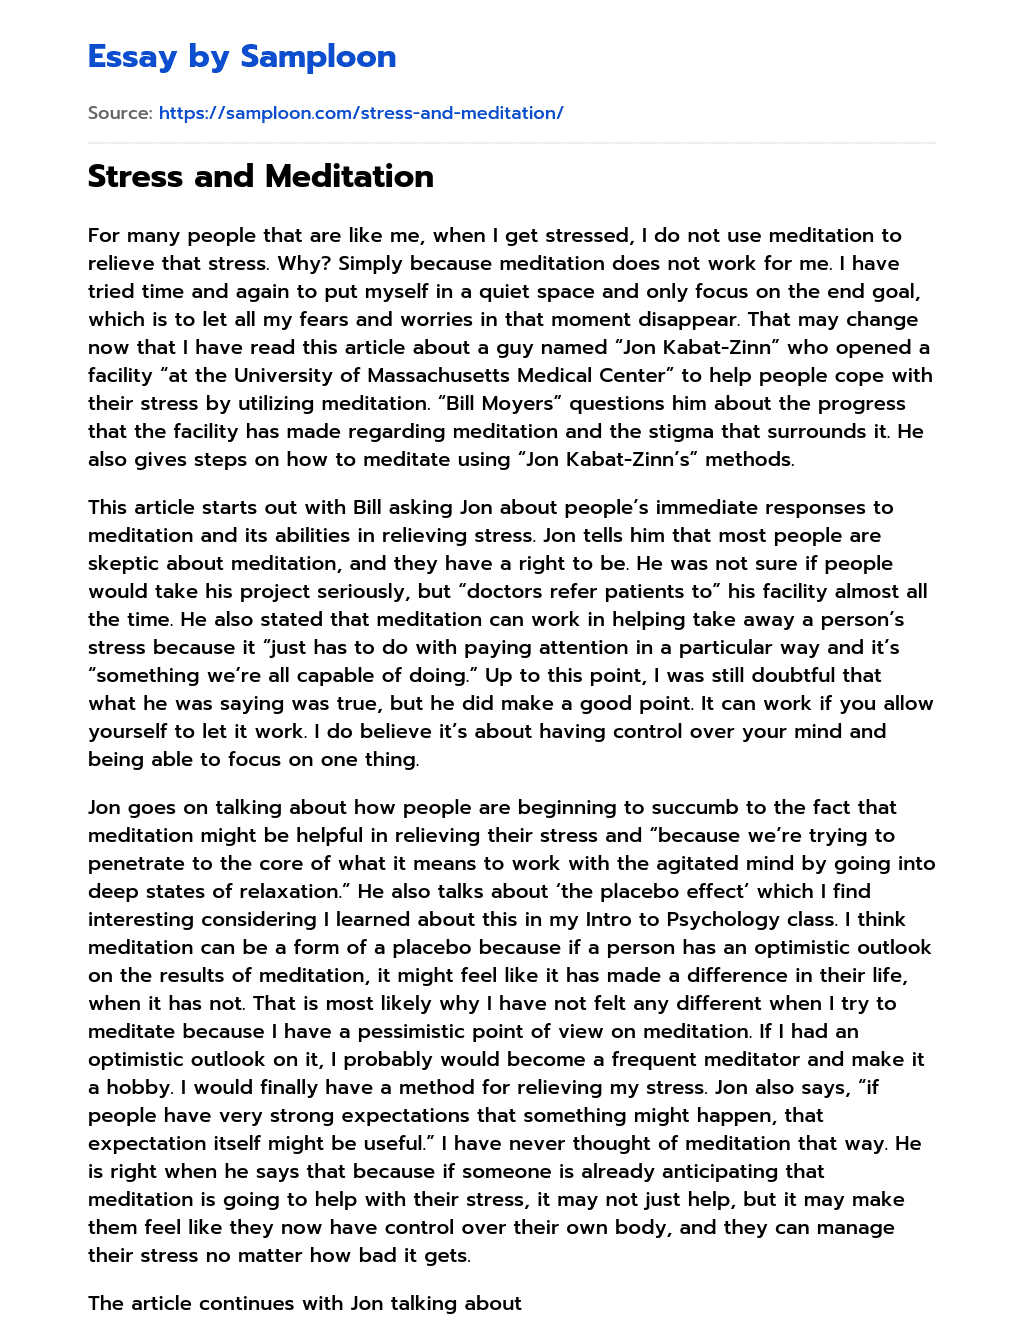 Stress and Meditation essay